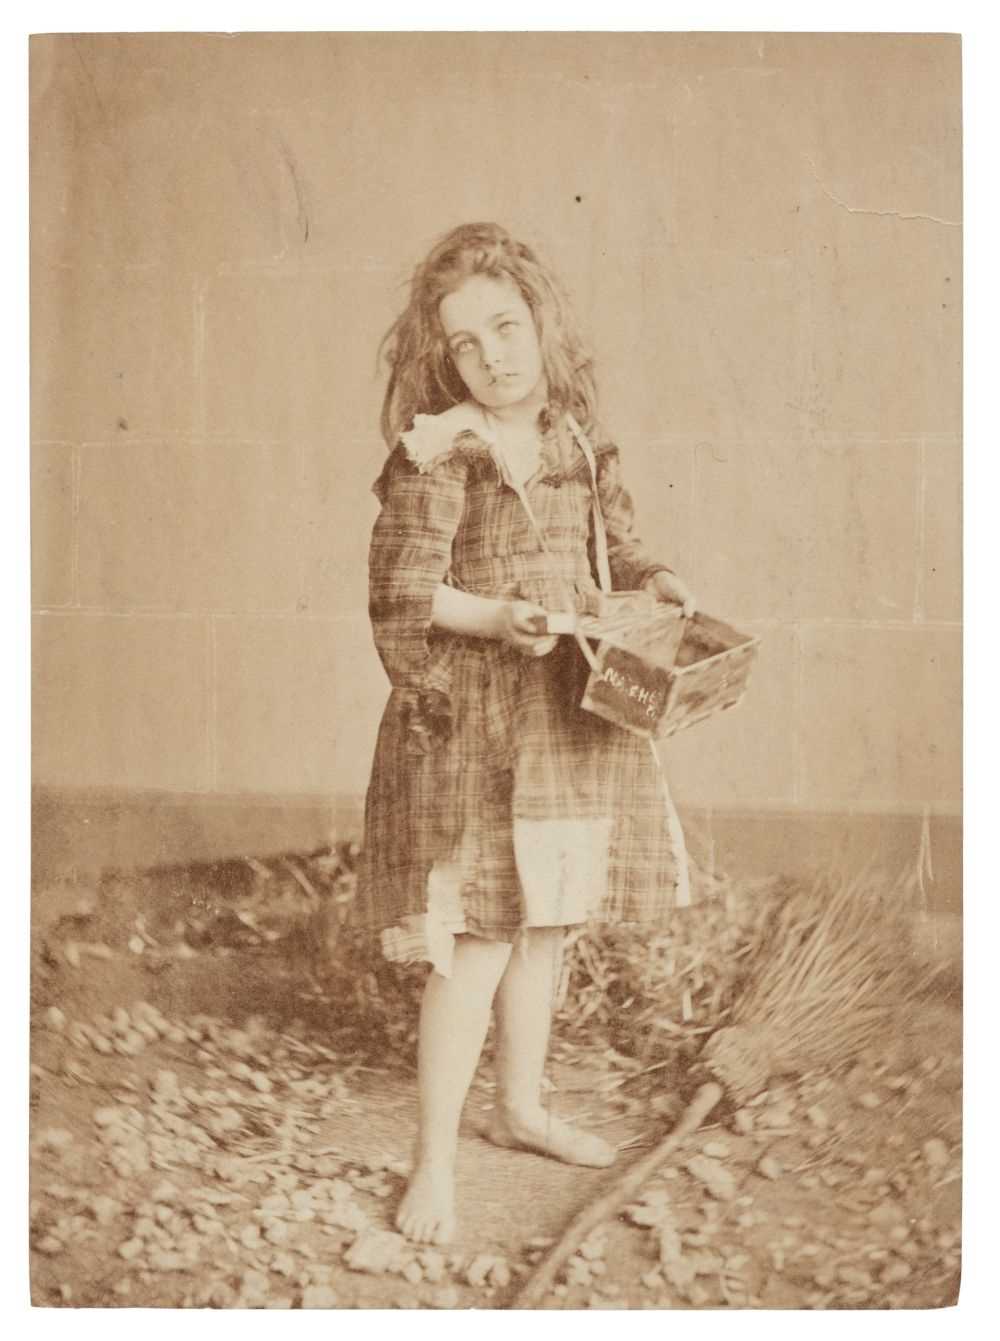 Lot 26 - Rejlander (Oscar Gustave, style of). Little matchgirl, c. 1860, albumen print